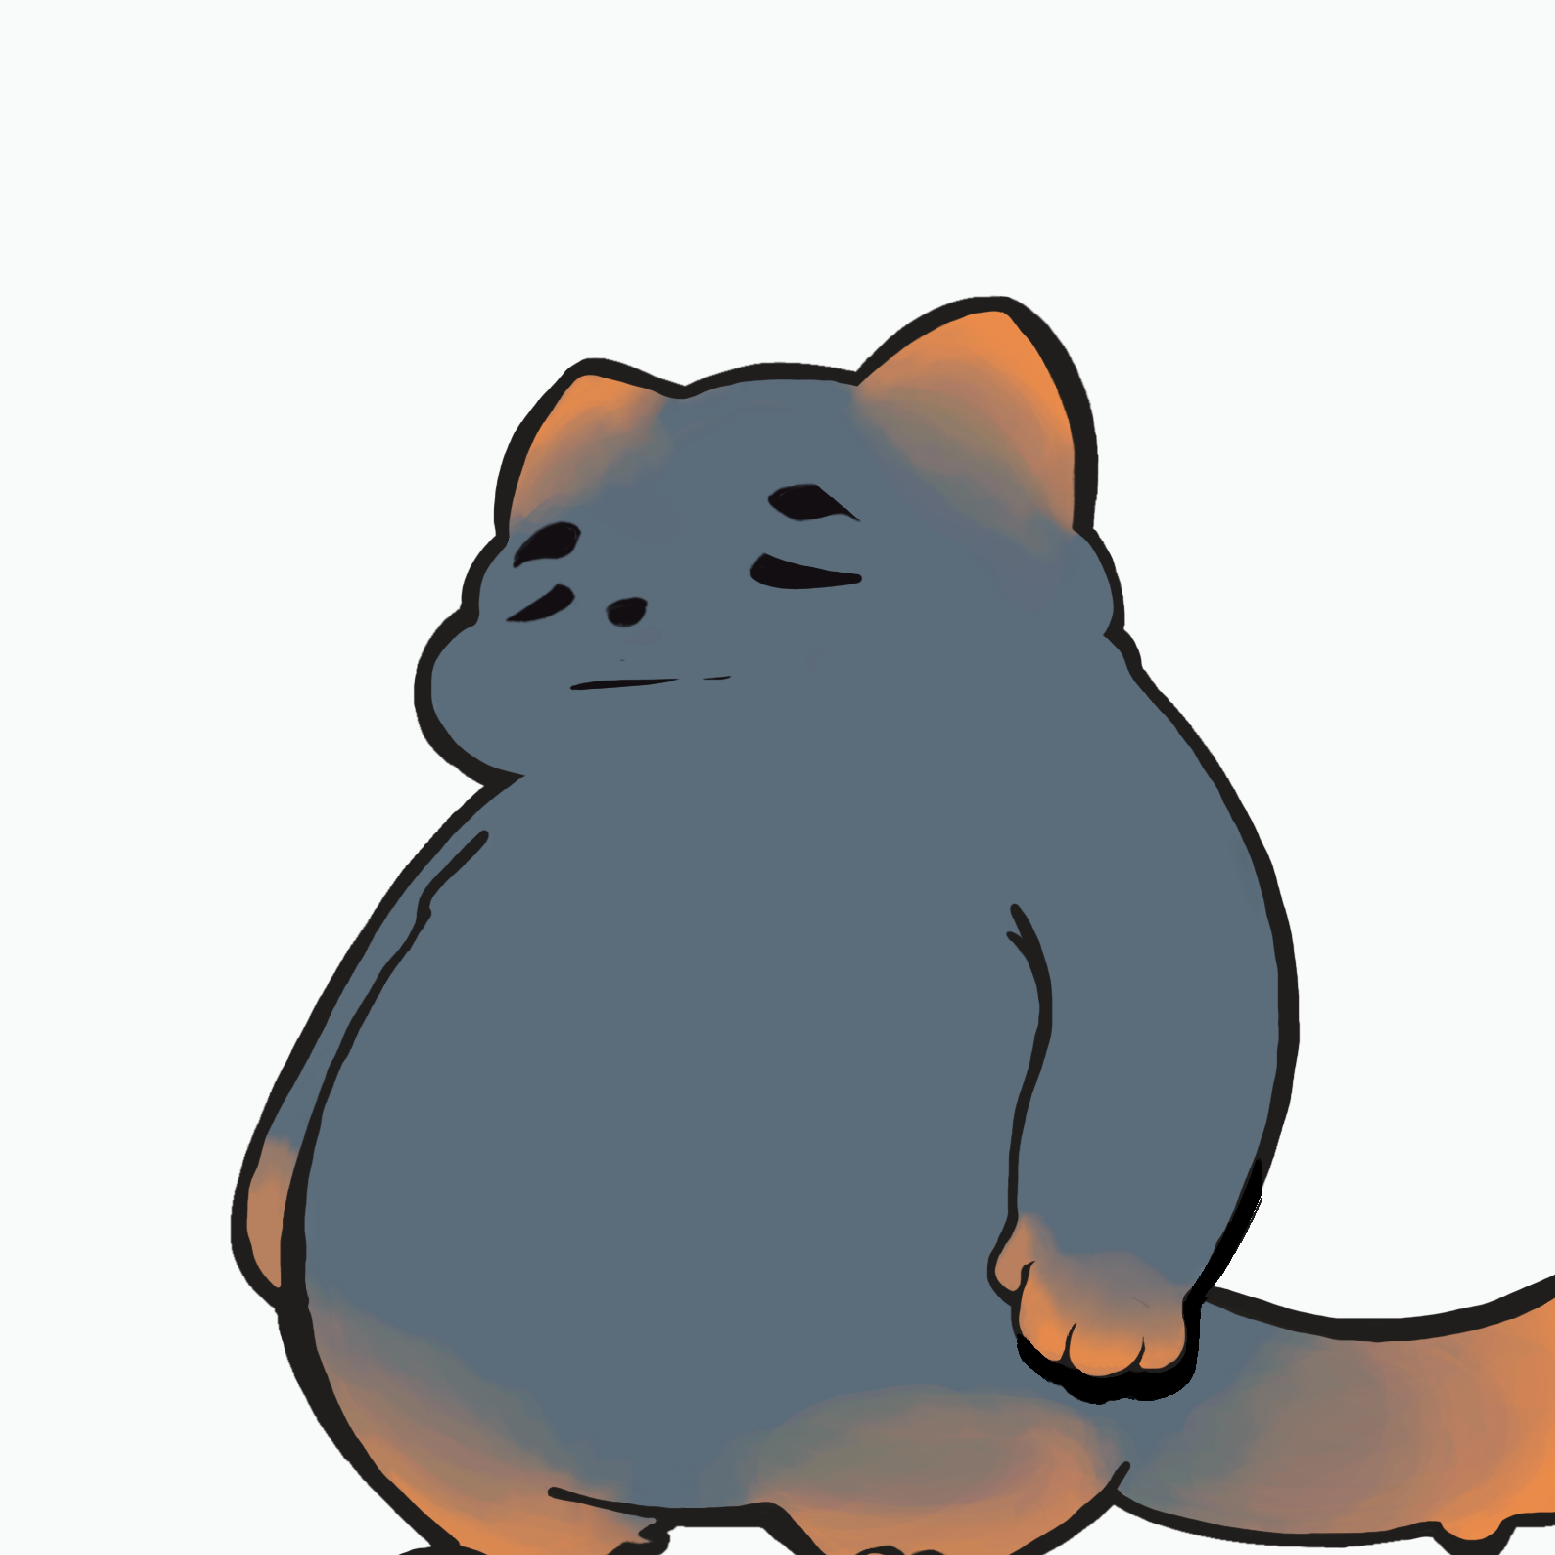 Degen Fat Cat the 15828th